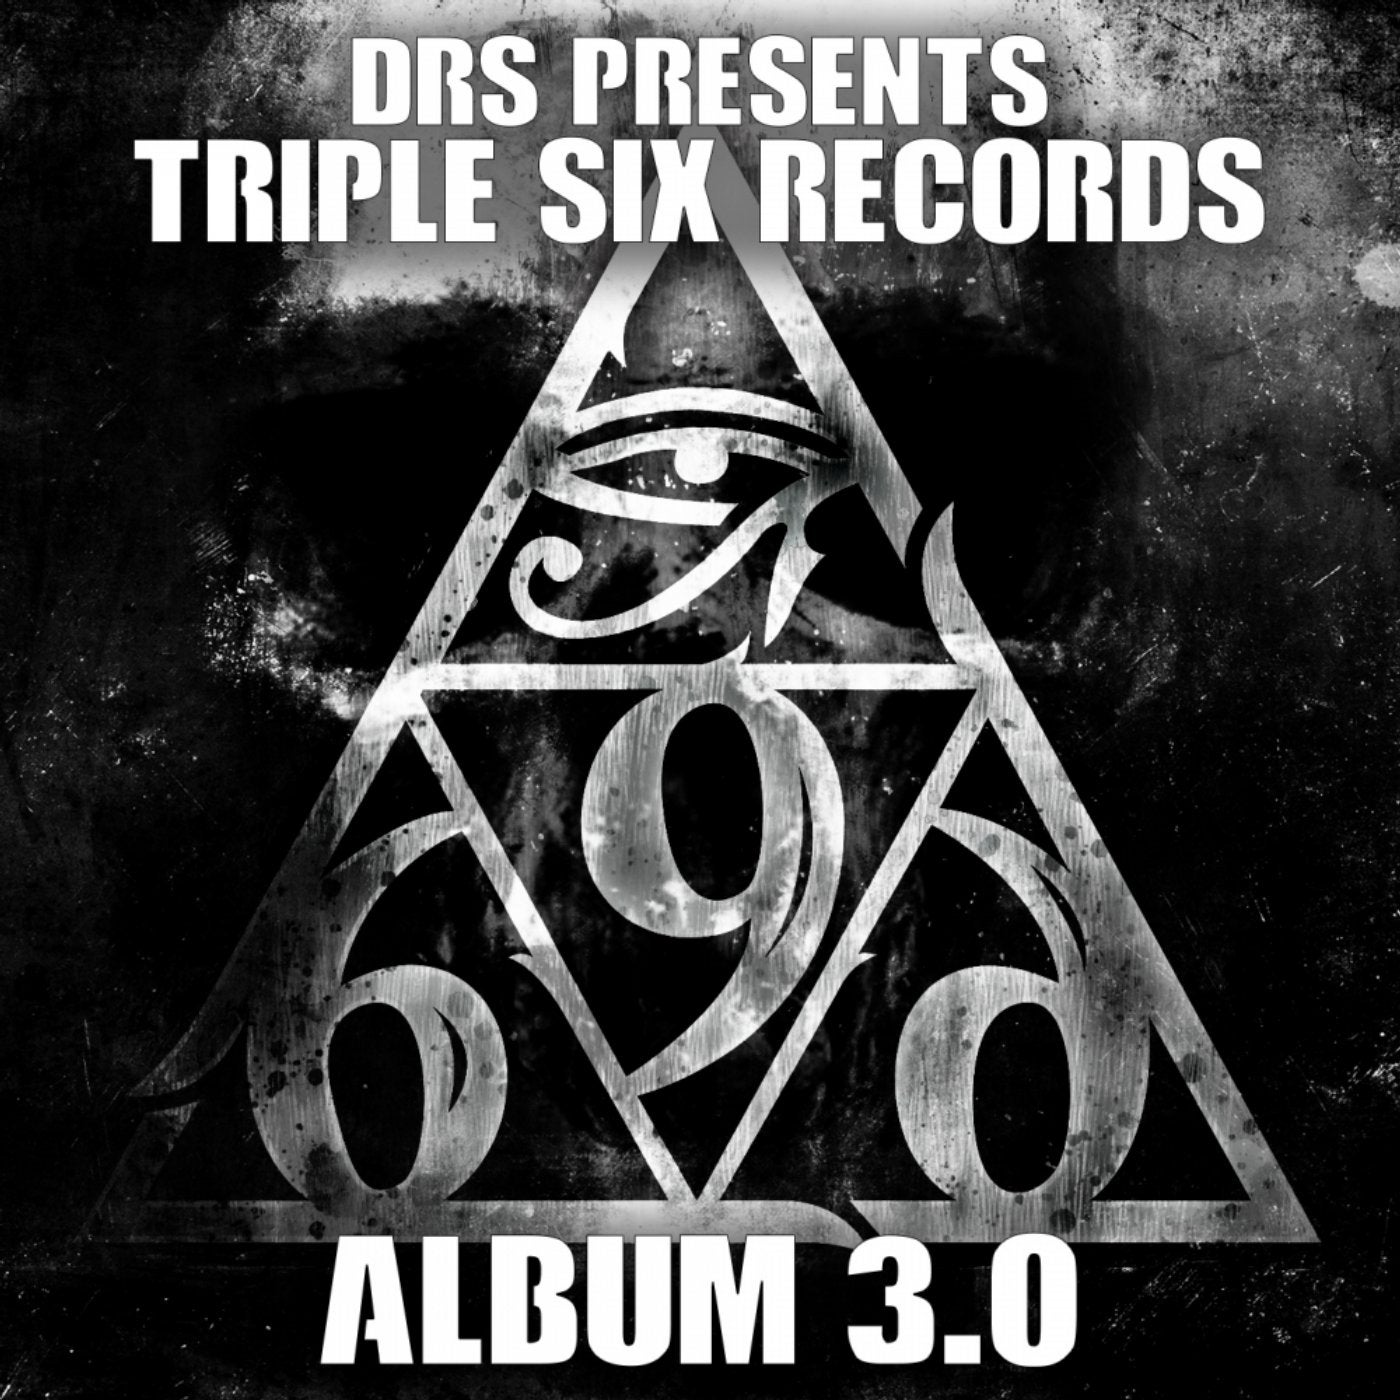 DRS presents Triple Six Records album 3.0